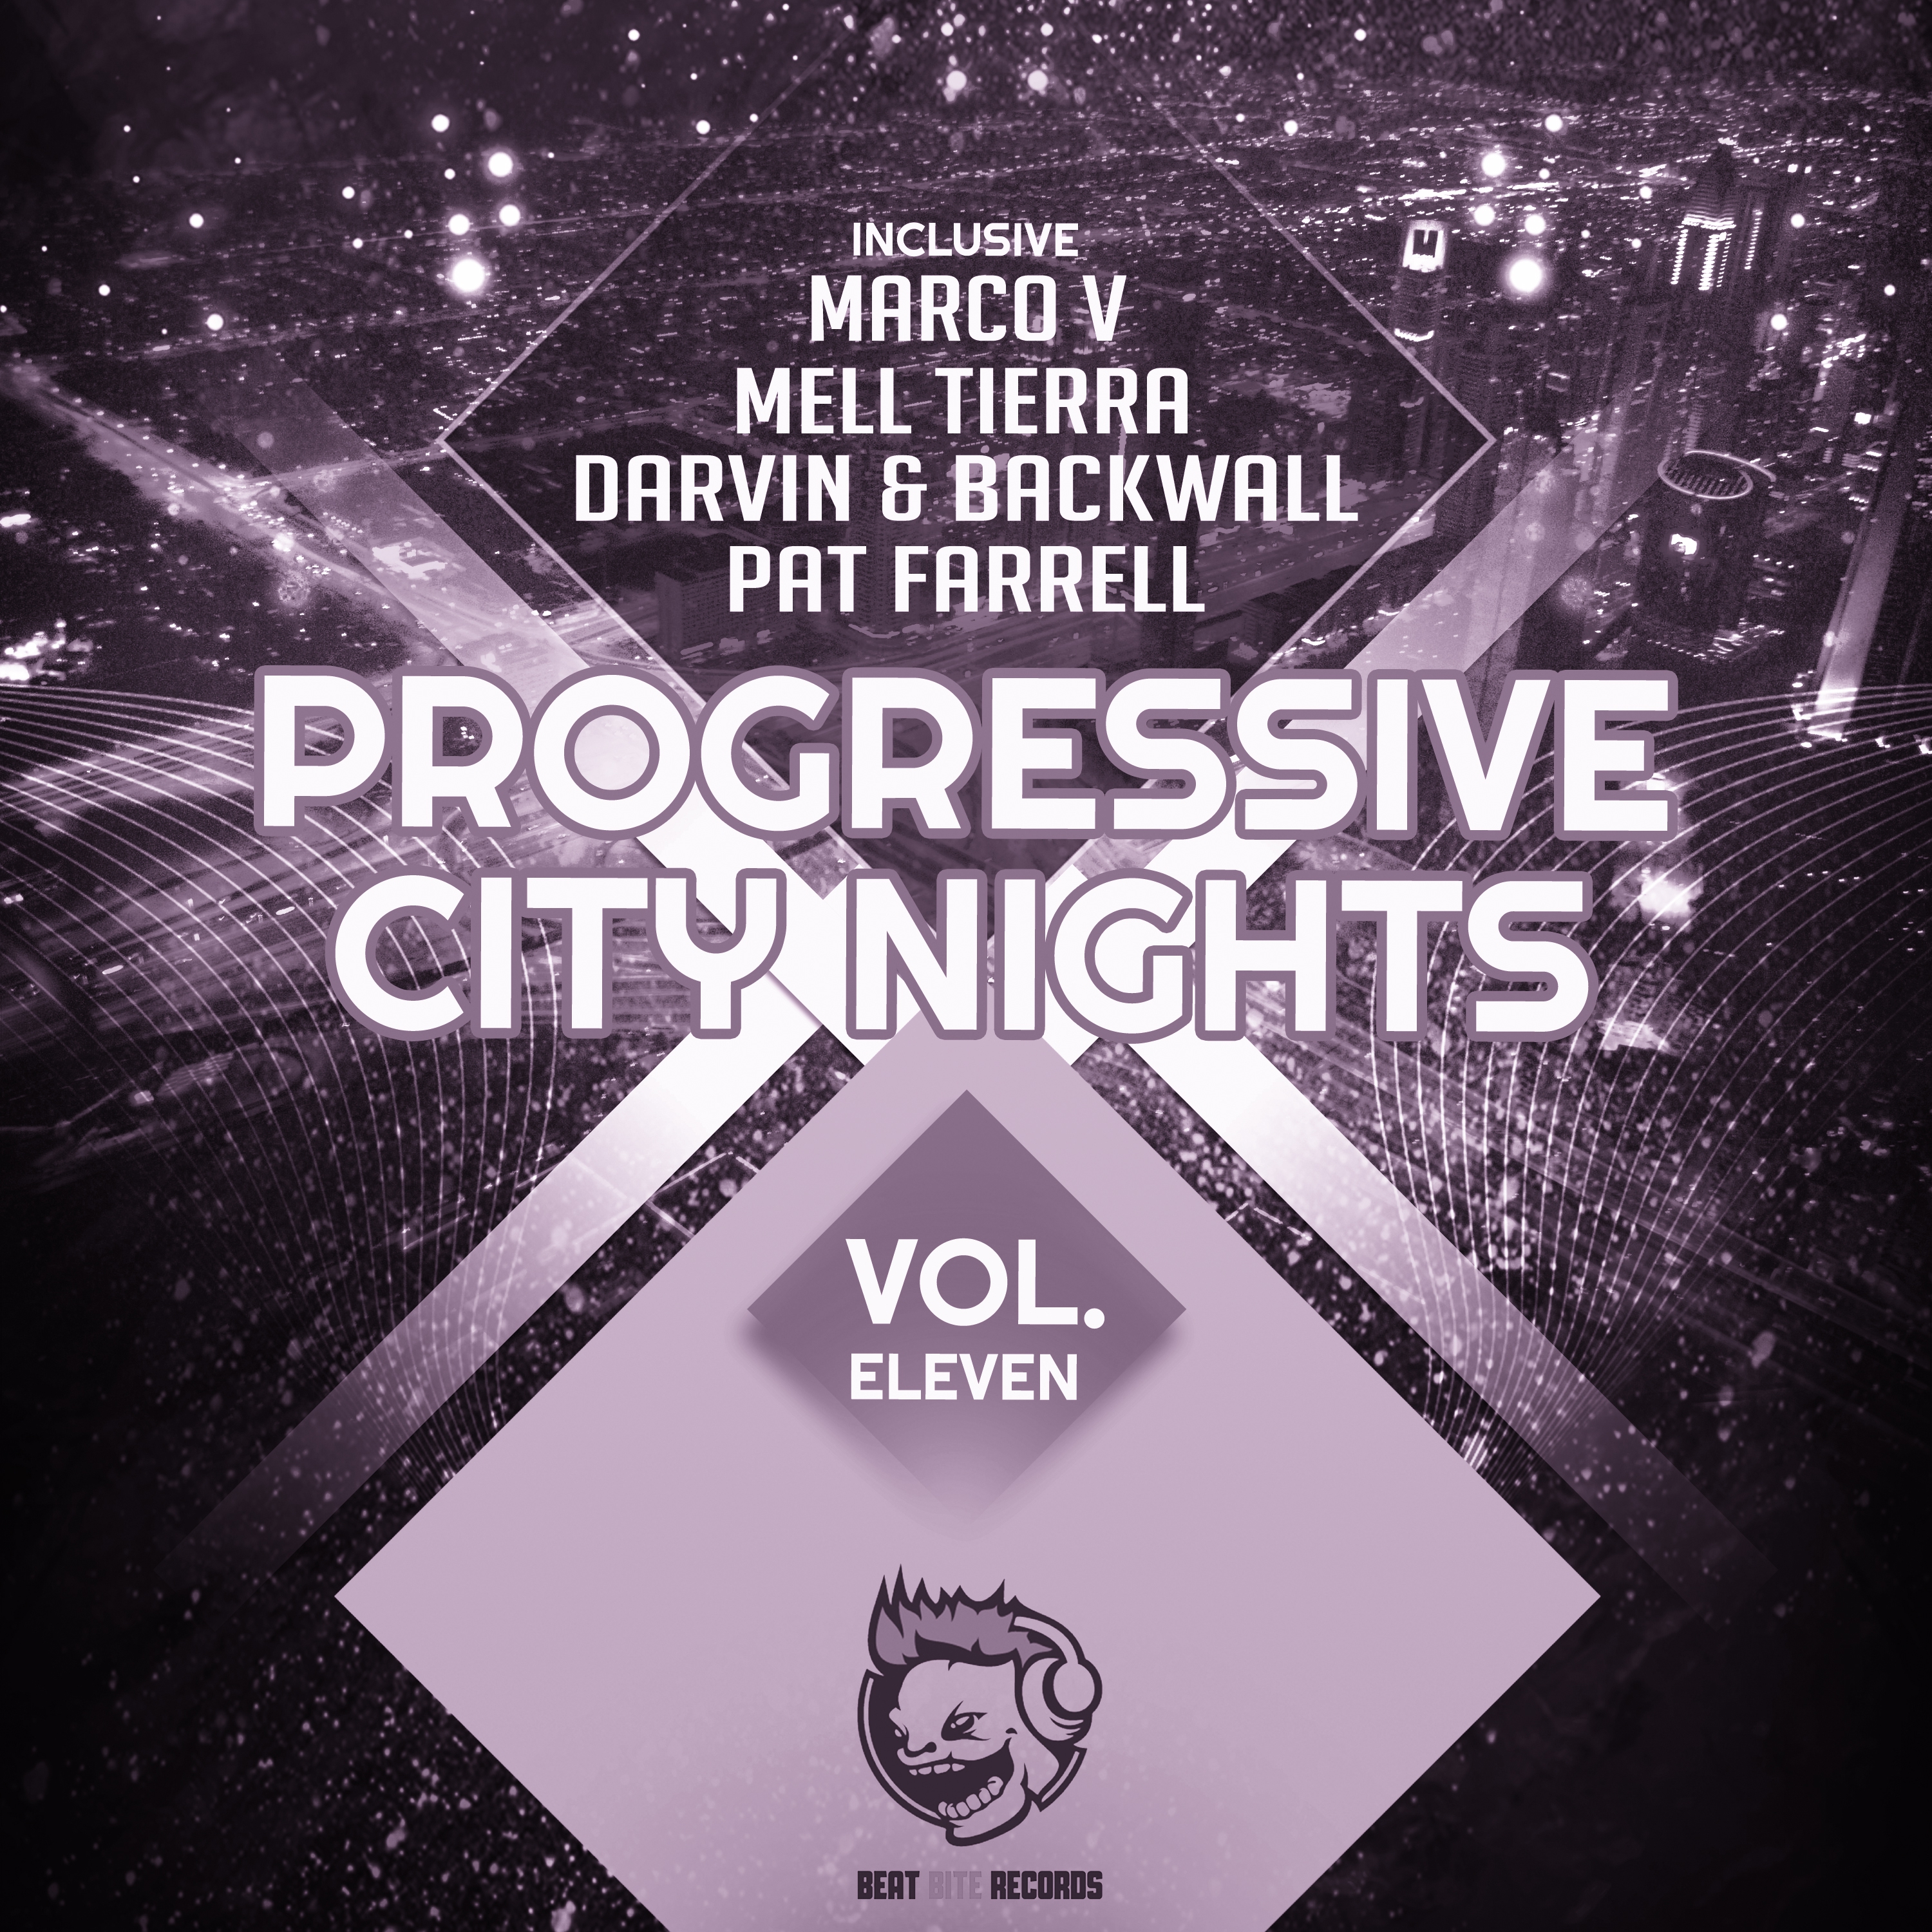 Progressive City Nights. Vol. Eleven